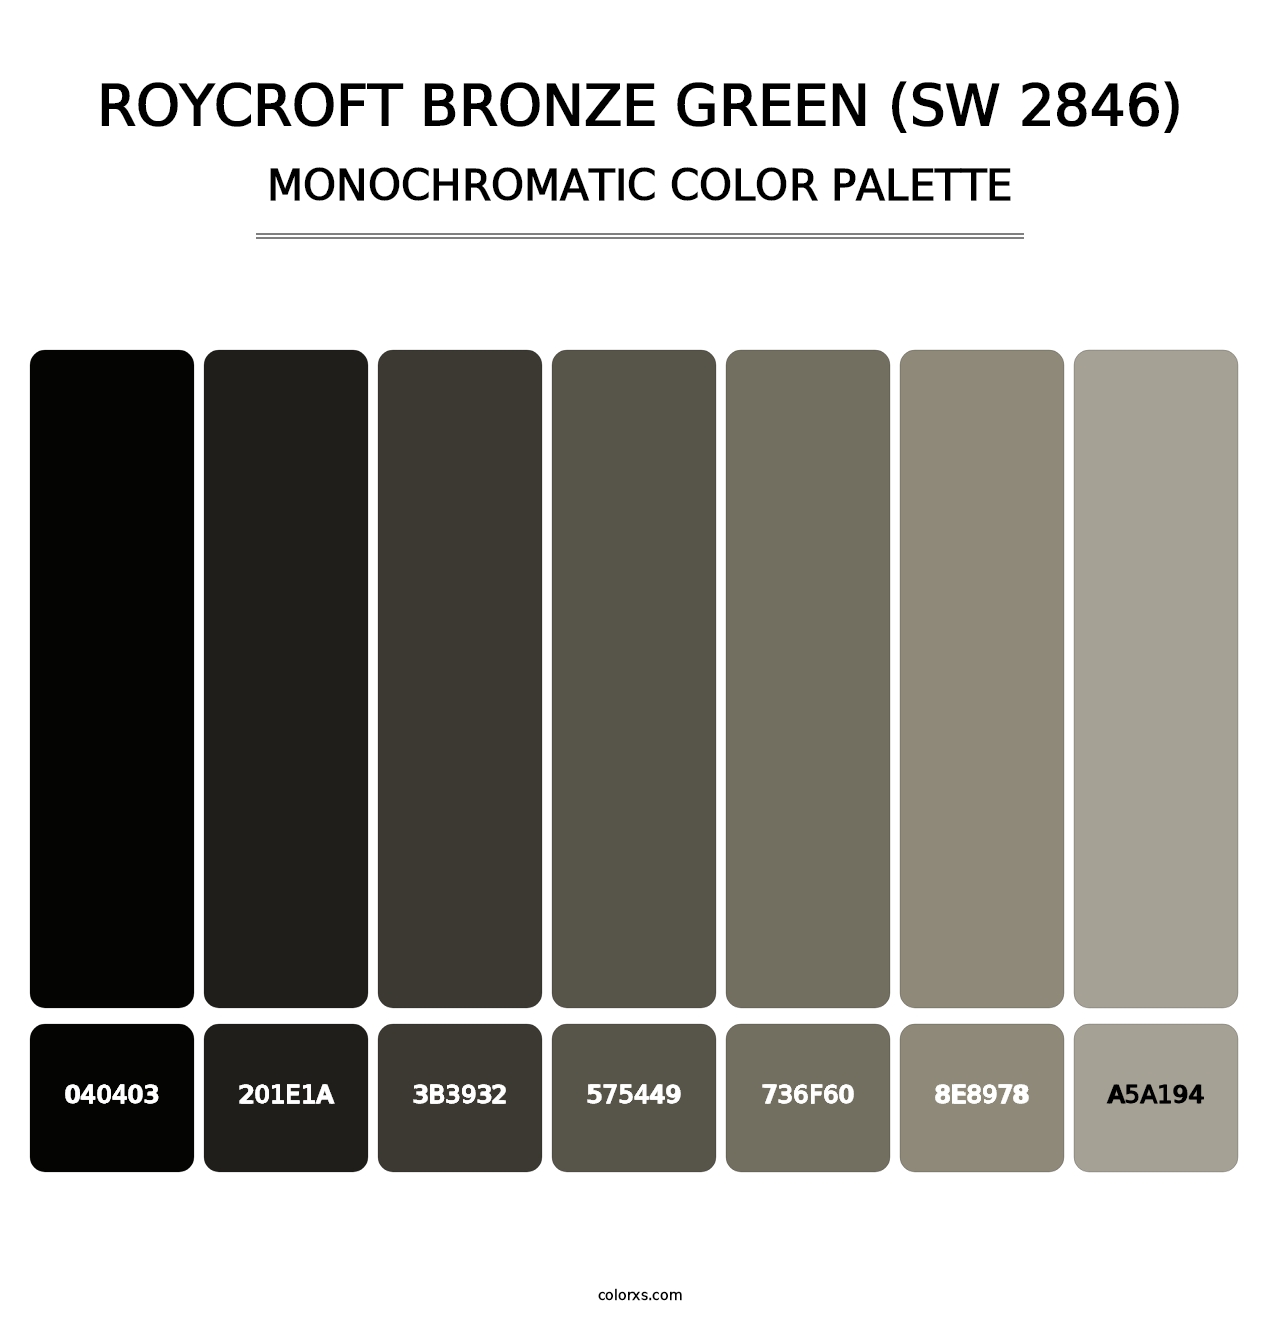 Roycroft Bronze Green (SW 2846) - Monochromatic Color Palette